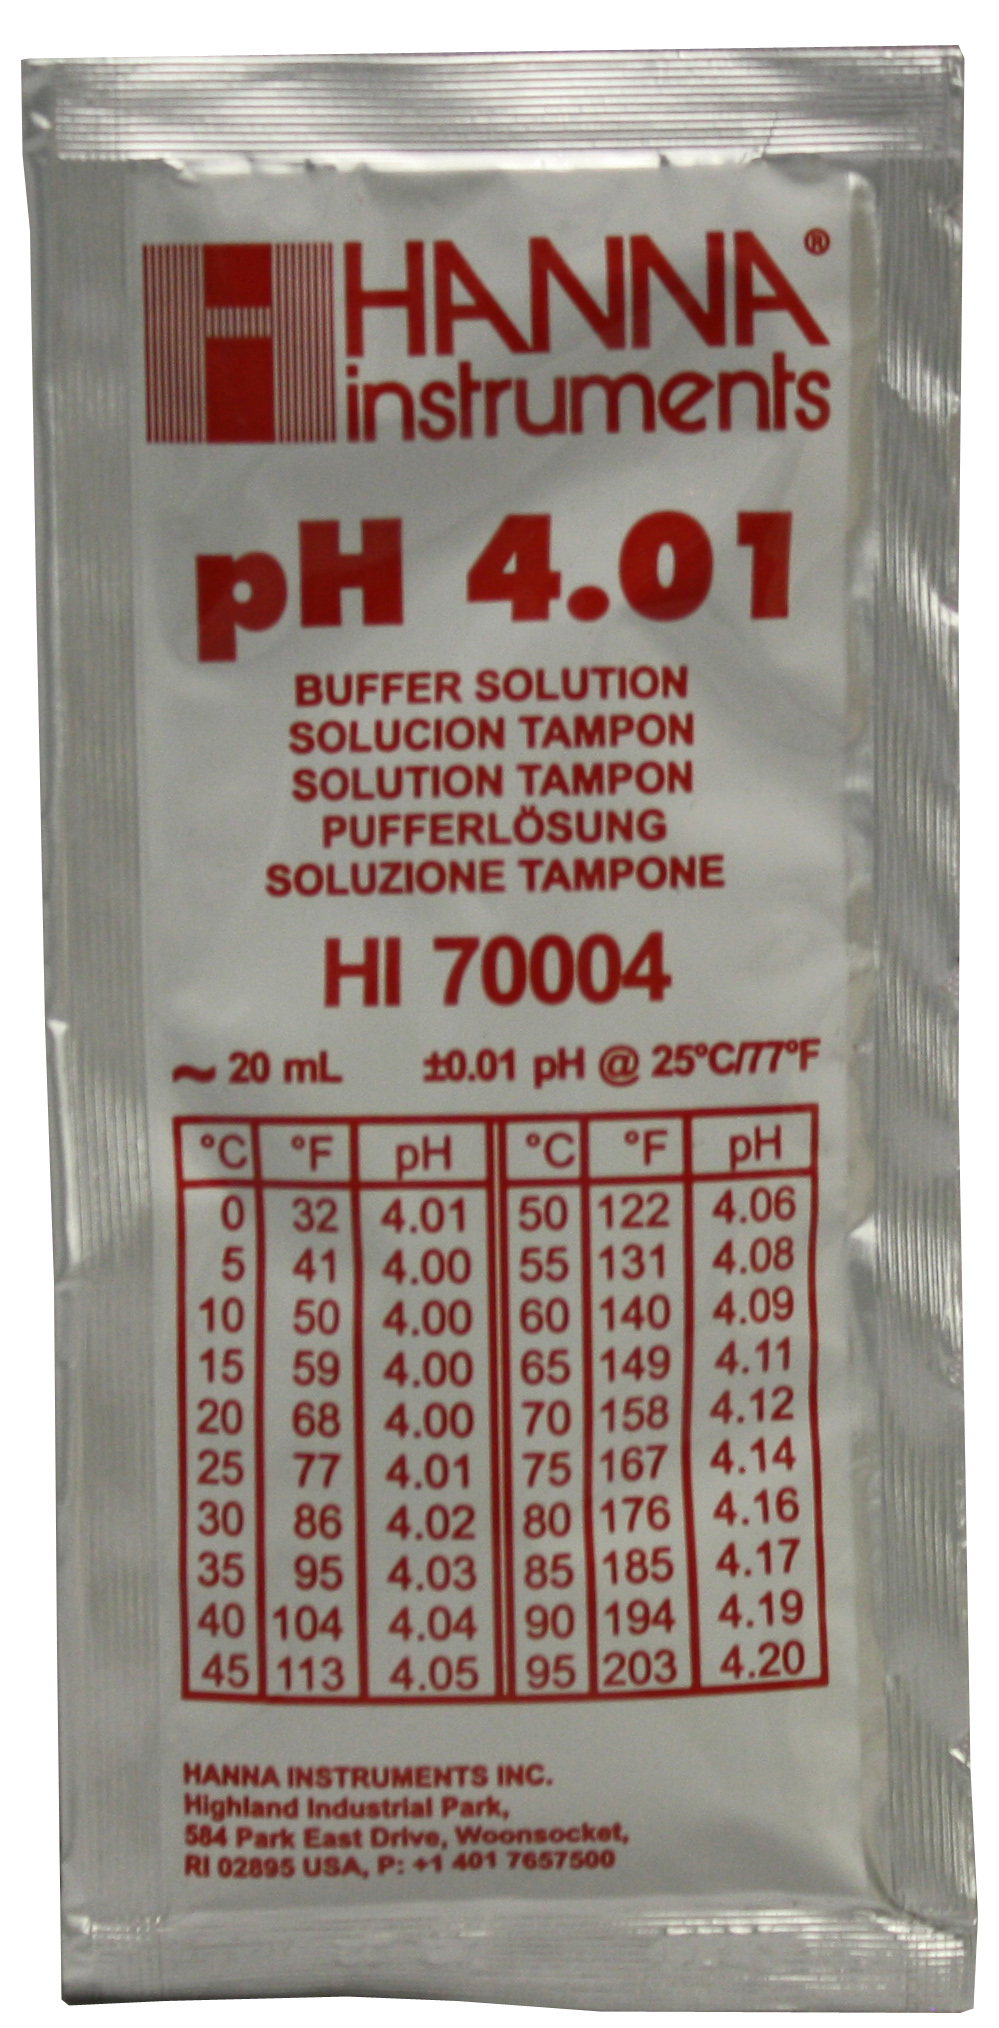 pH meter buffer solution 4.01